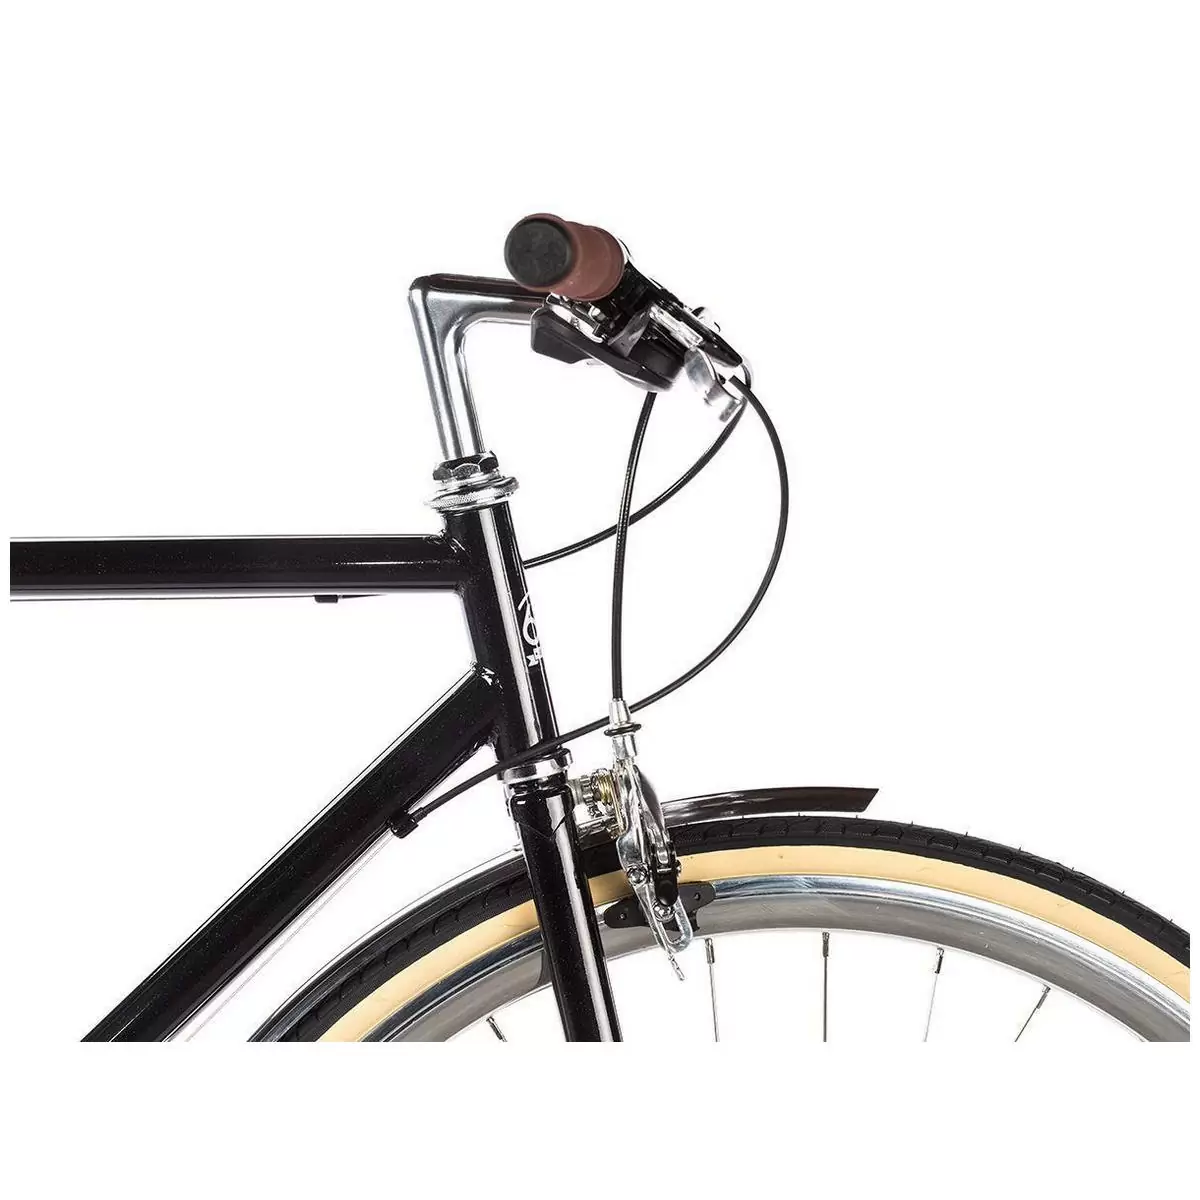 Bicicleta urbana ODYSSEY 8v Delano negra mediana 54cm #3